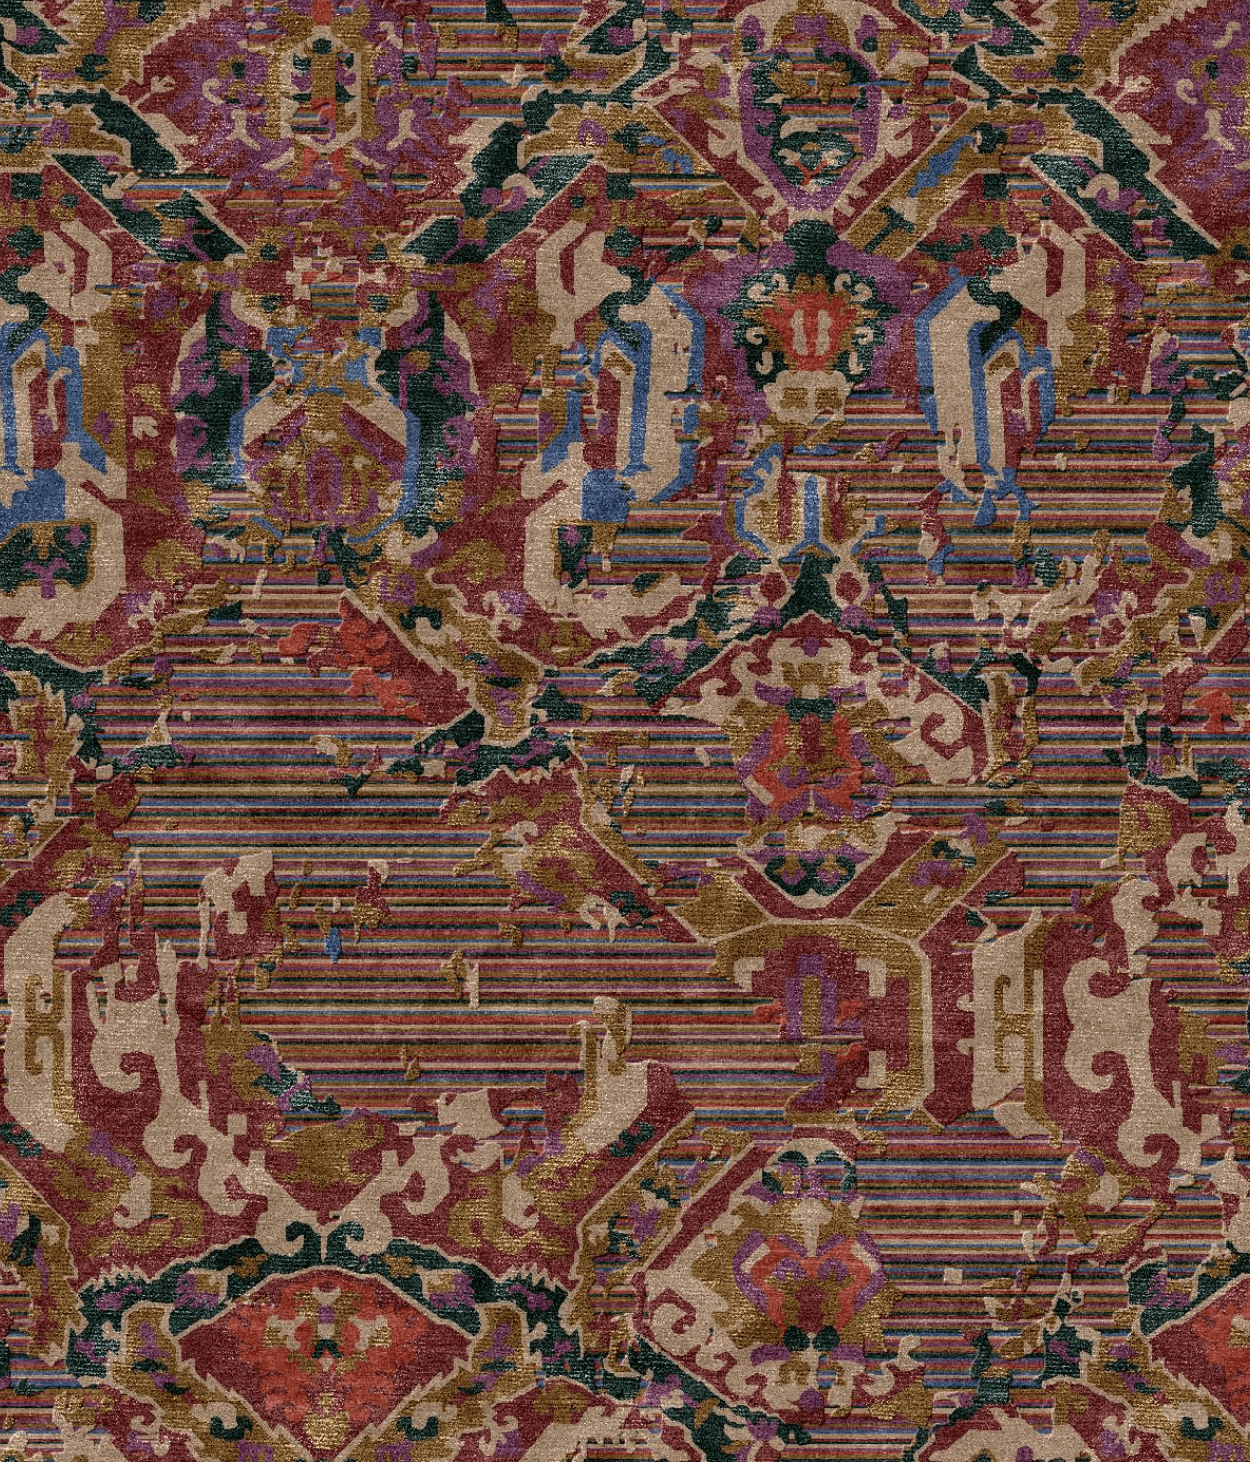 Makalu Nepal Teppich Antique M131 Handgeknüpft im Wunschmaß 